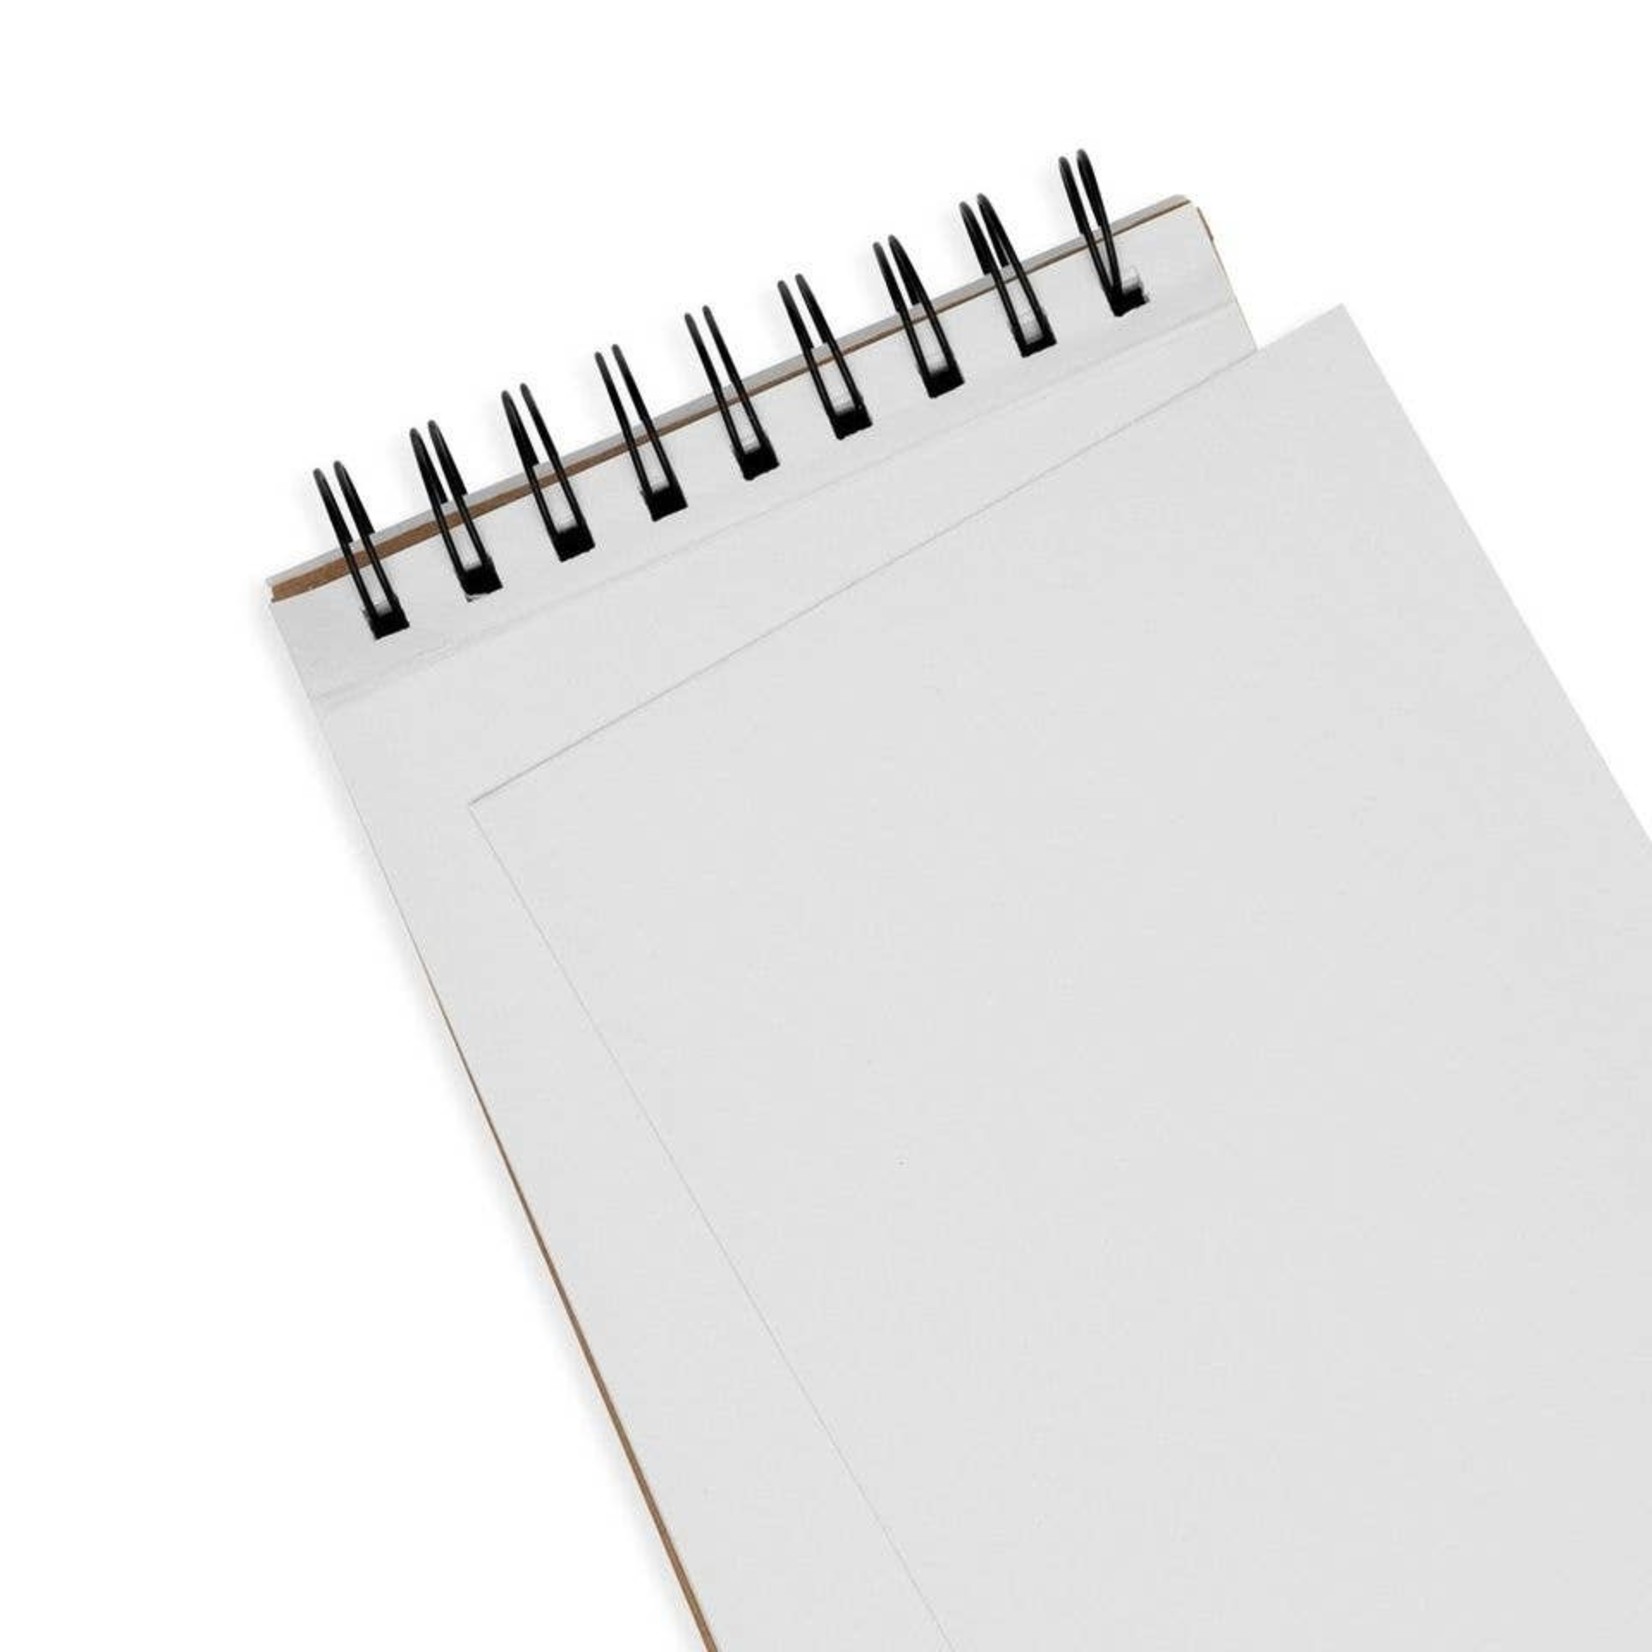 OOLY White Paper Sketchbook in 5x7